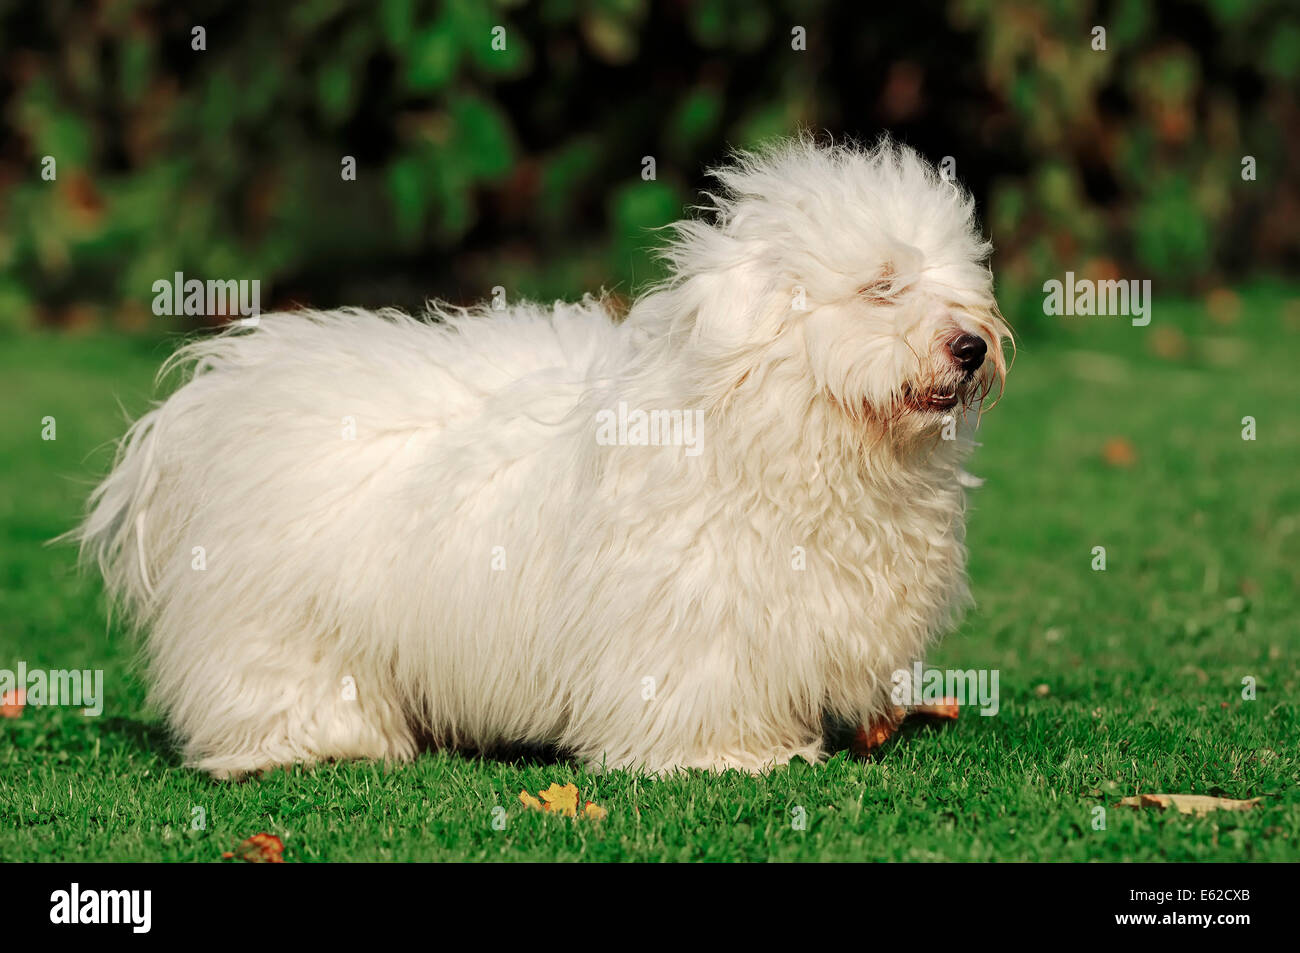 Coton de Tulear (Canis lupus familiaris) Stock Photo